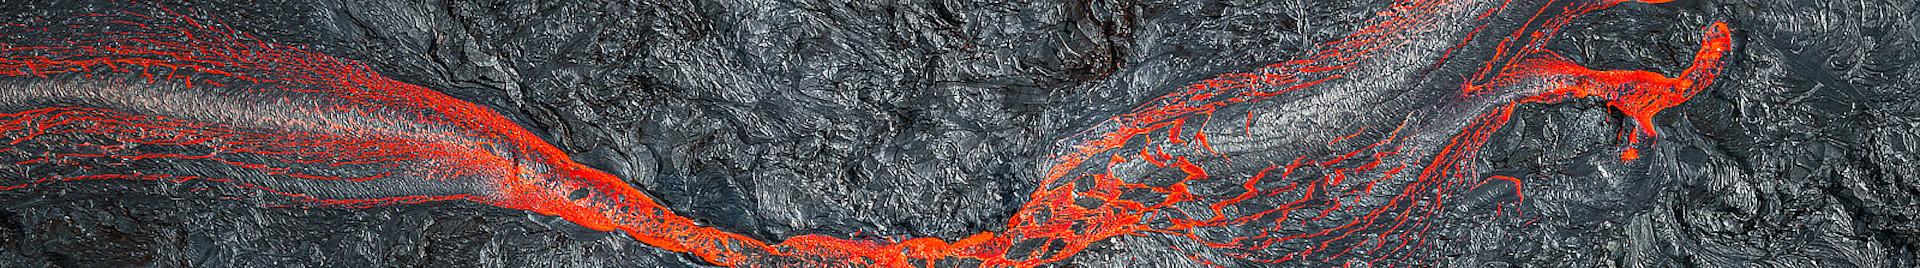 a photo of a lava river